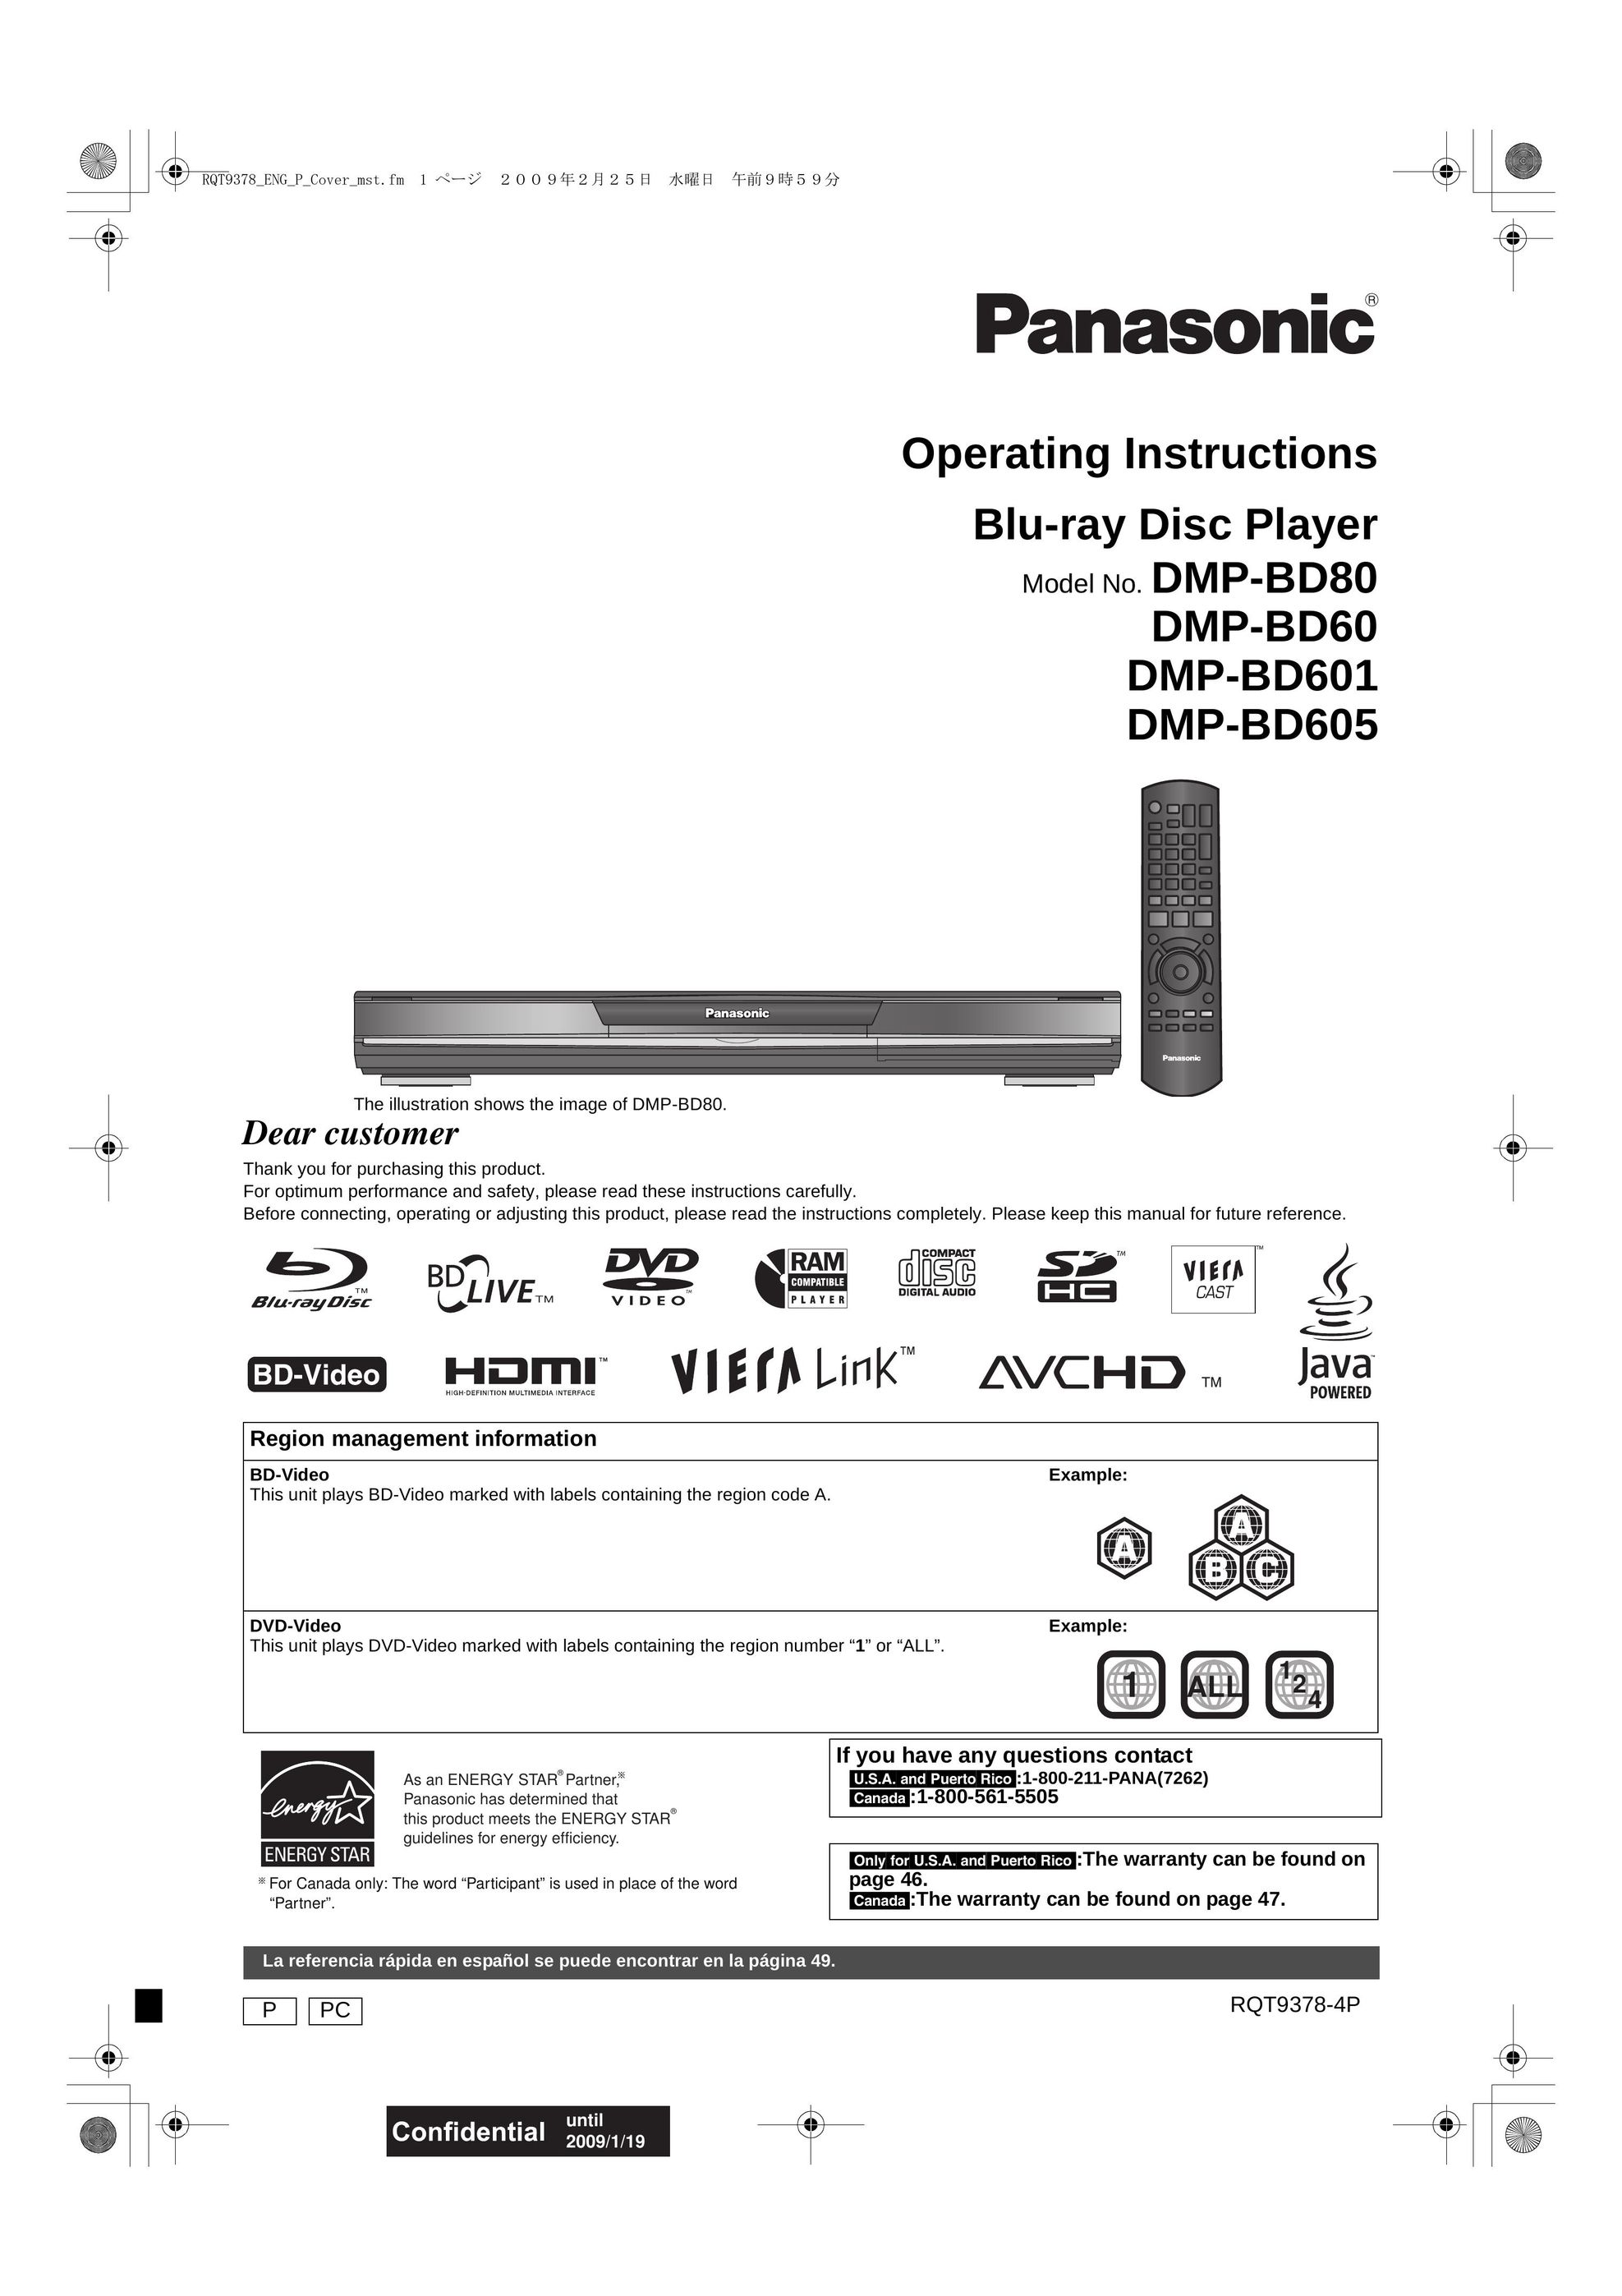 Panasonic DMP-BD605 DVD Player User Manual